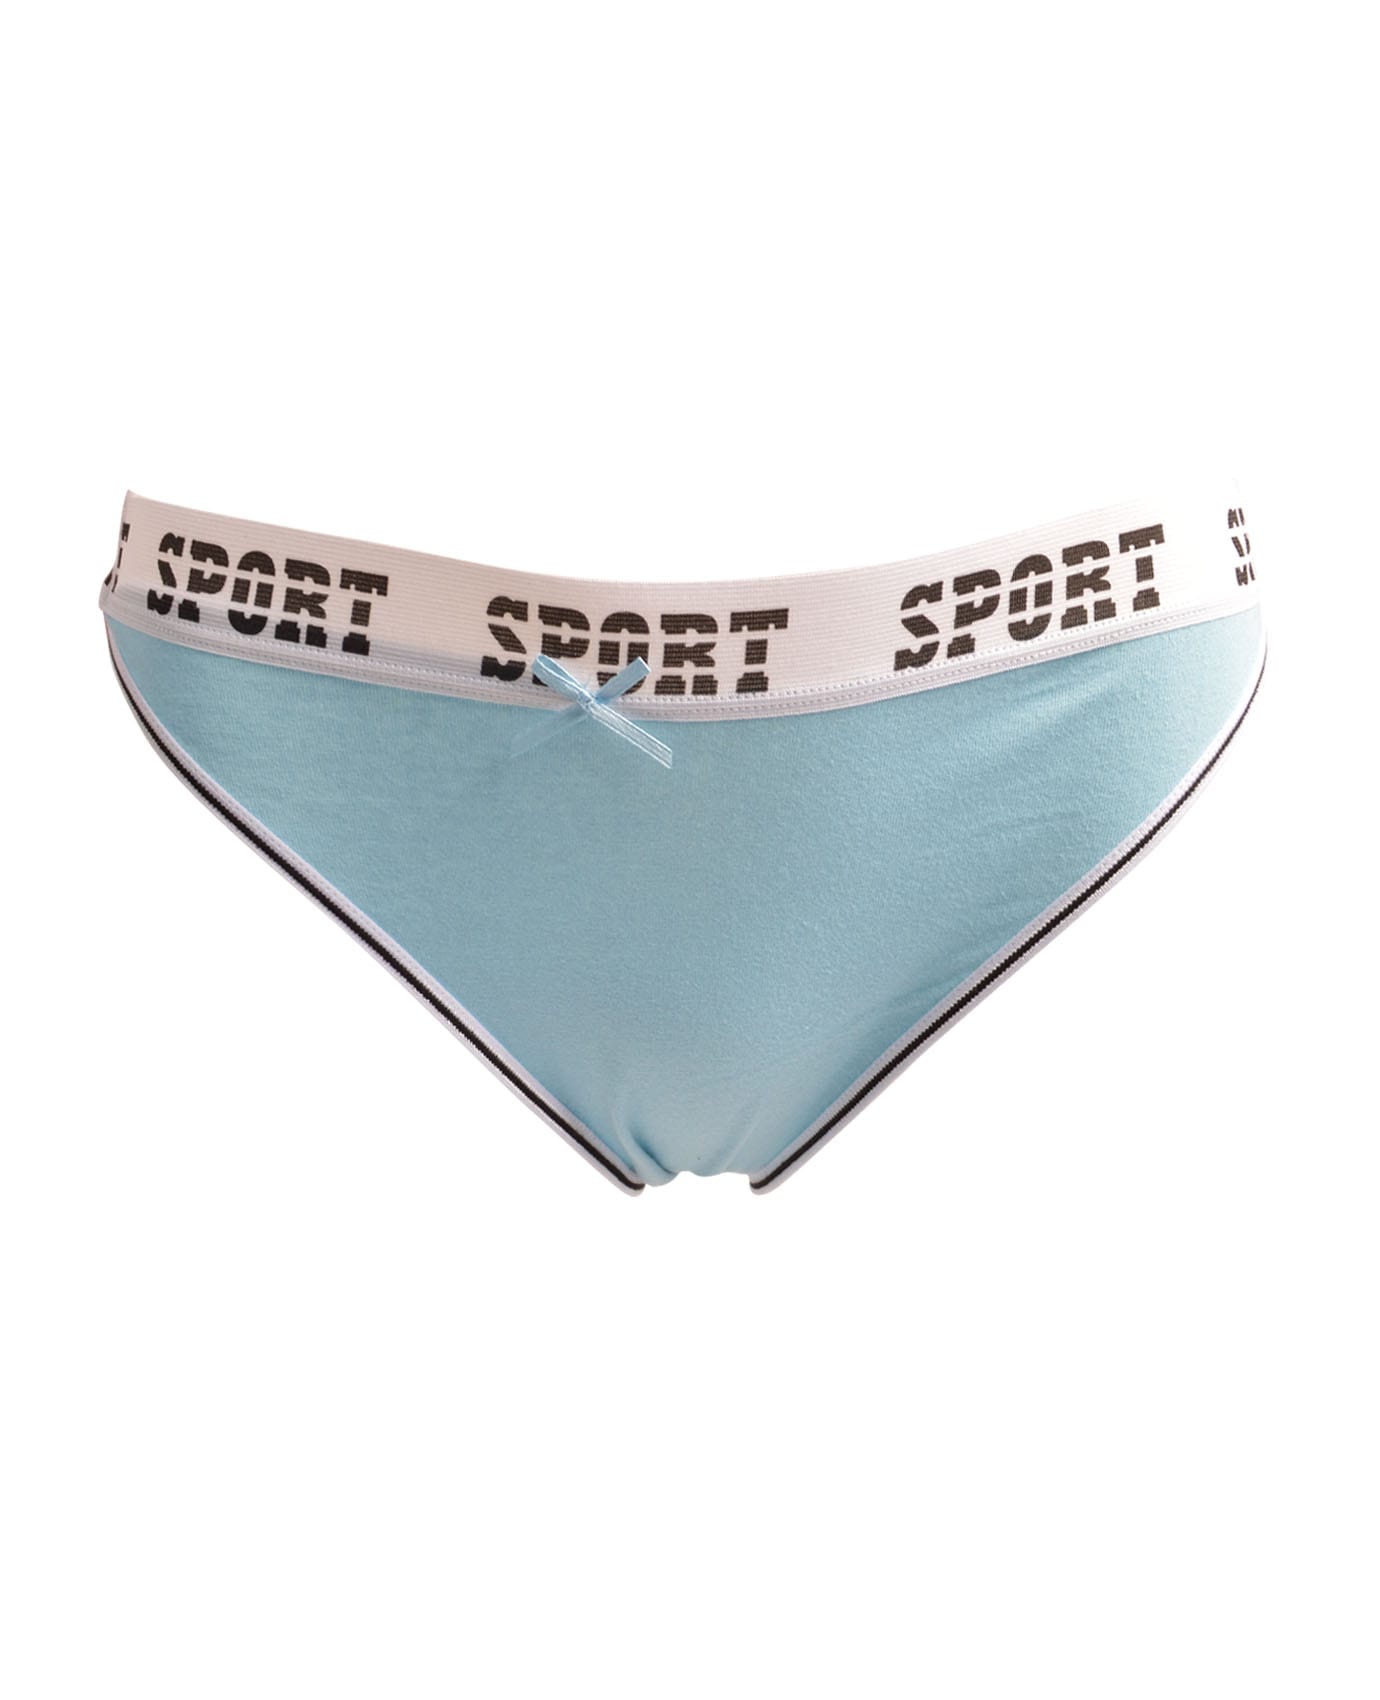 Vision Best Sport Panty – CHERRIE